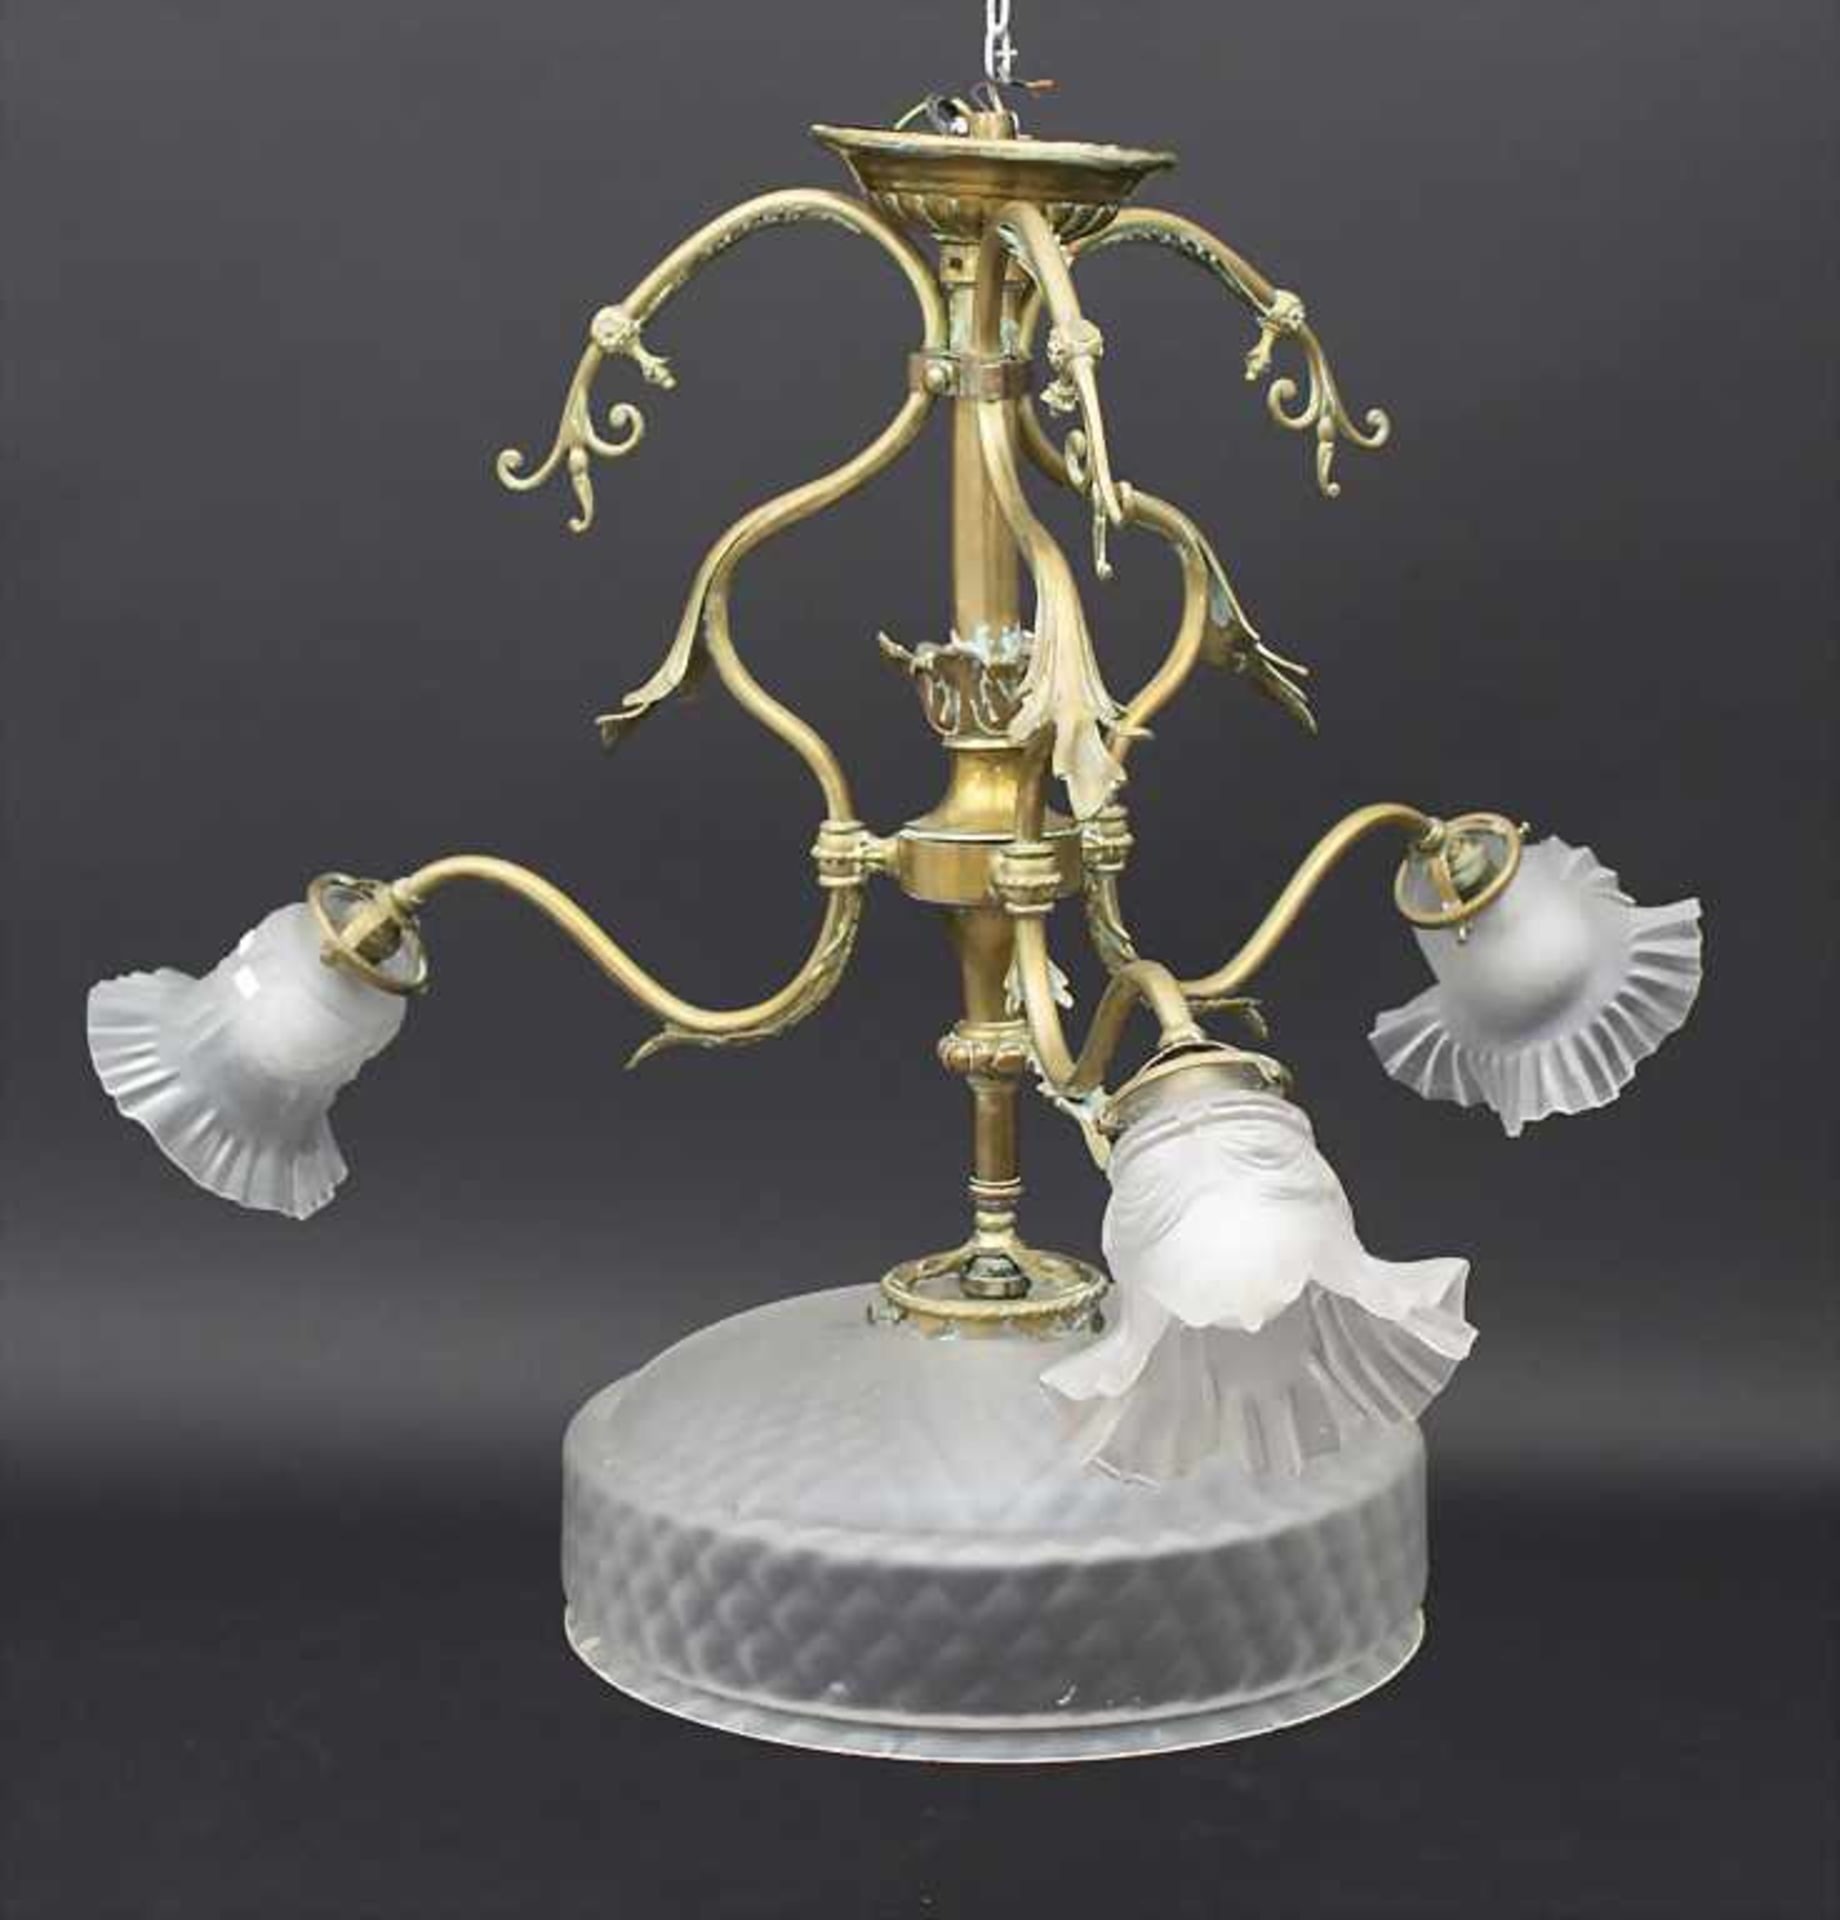 Deckenlampe / A ceiling lamp, um 1900 - Bild 2 aus 3